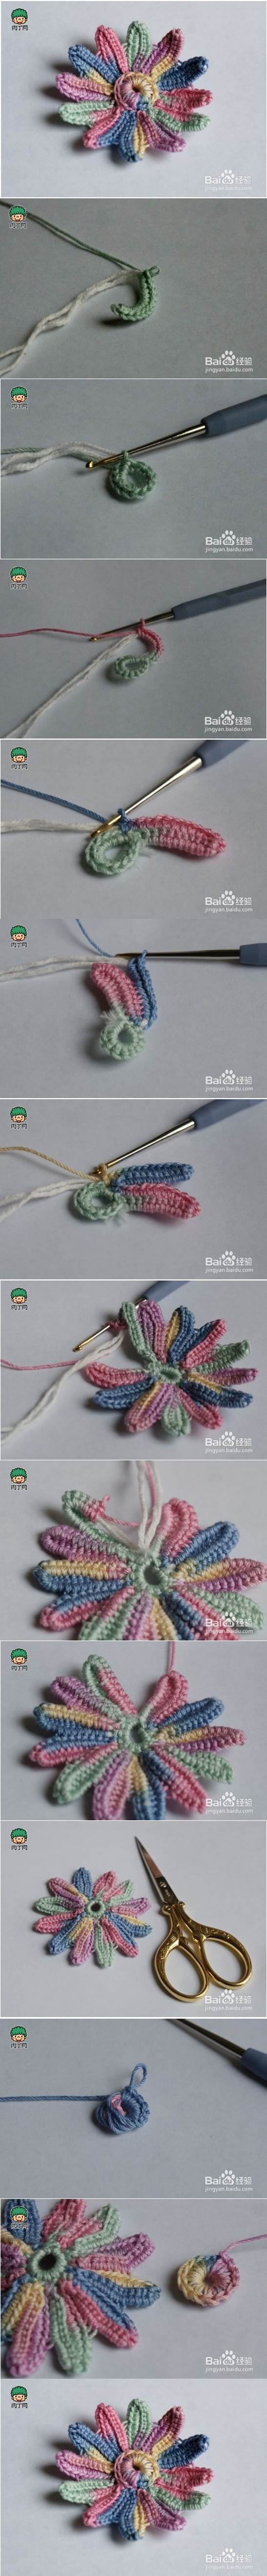 Colorful Chrysanthemum Crochet Pattern 2